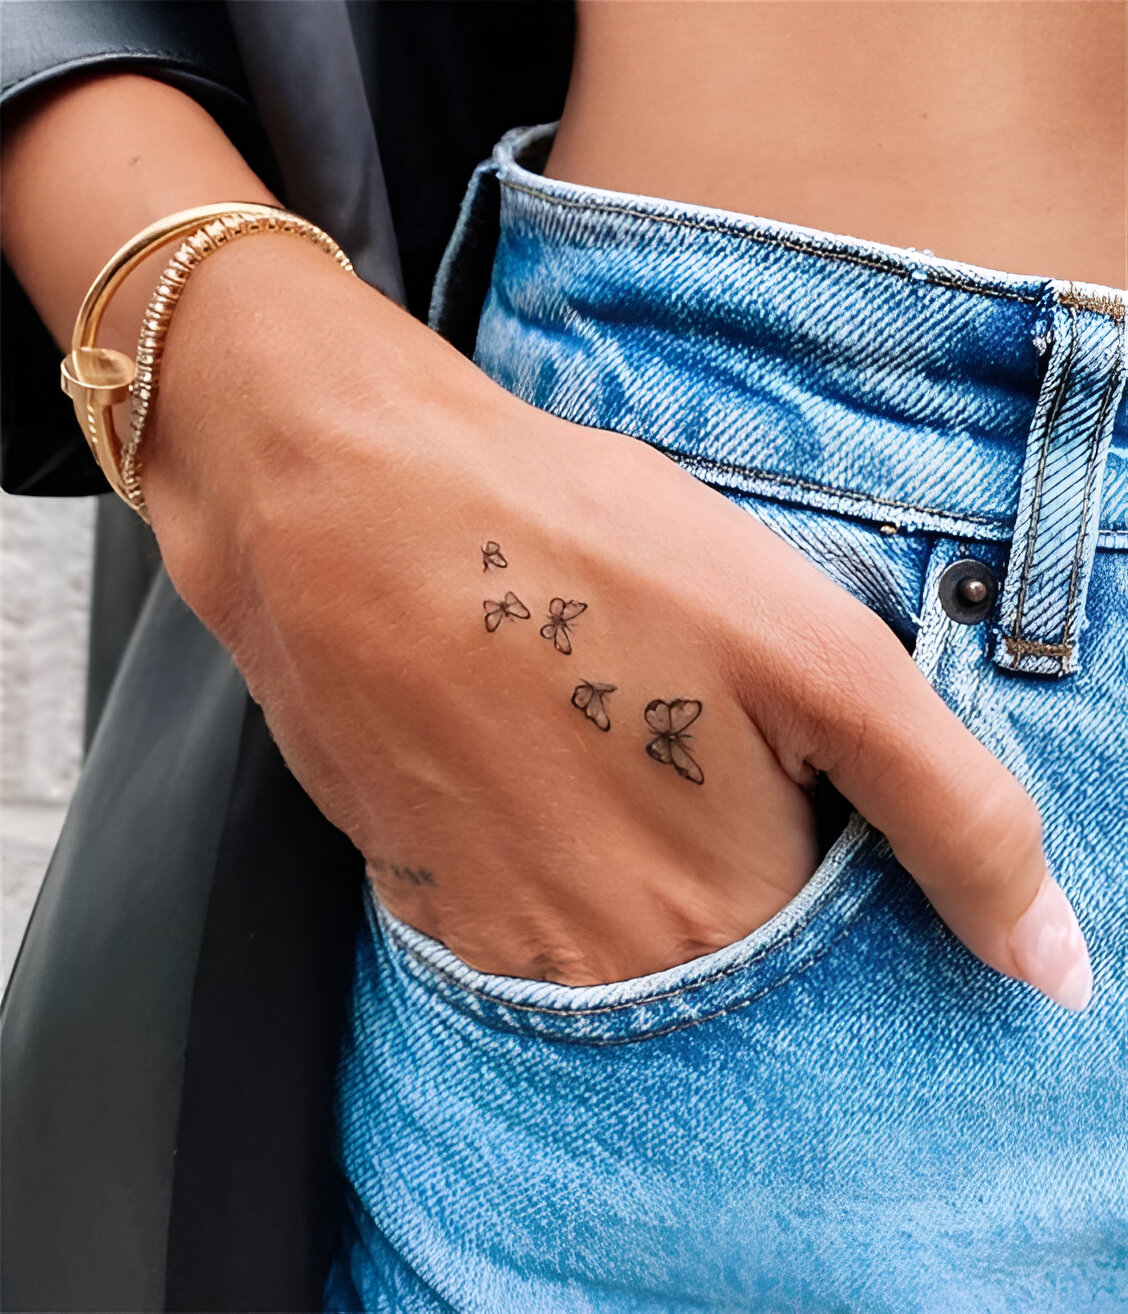 Minimalist Hand Tattoos With Butterflies